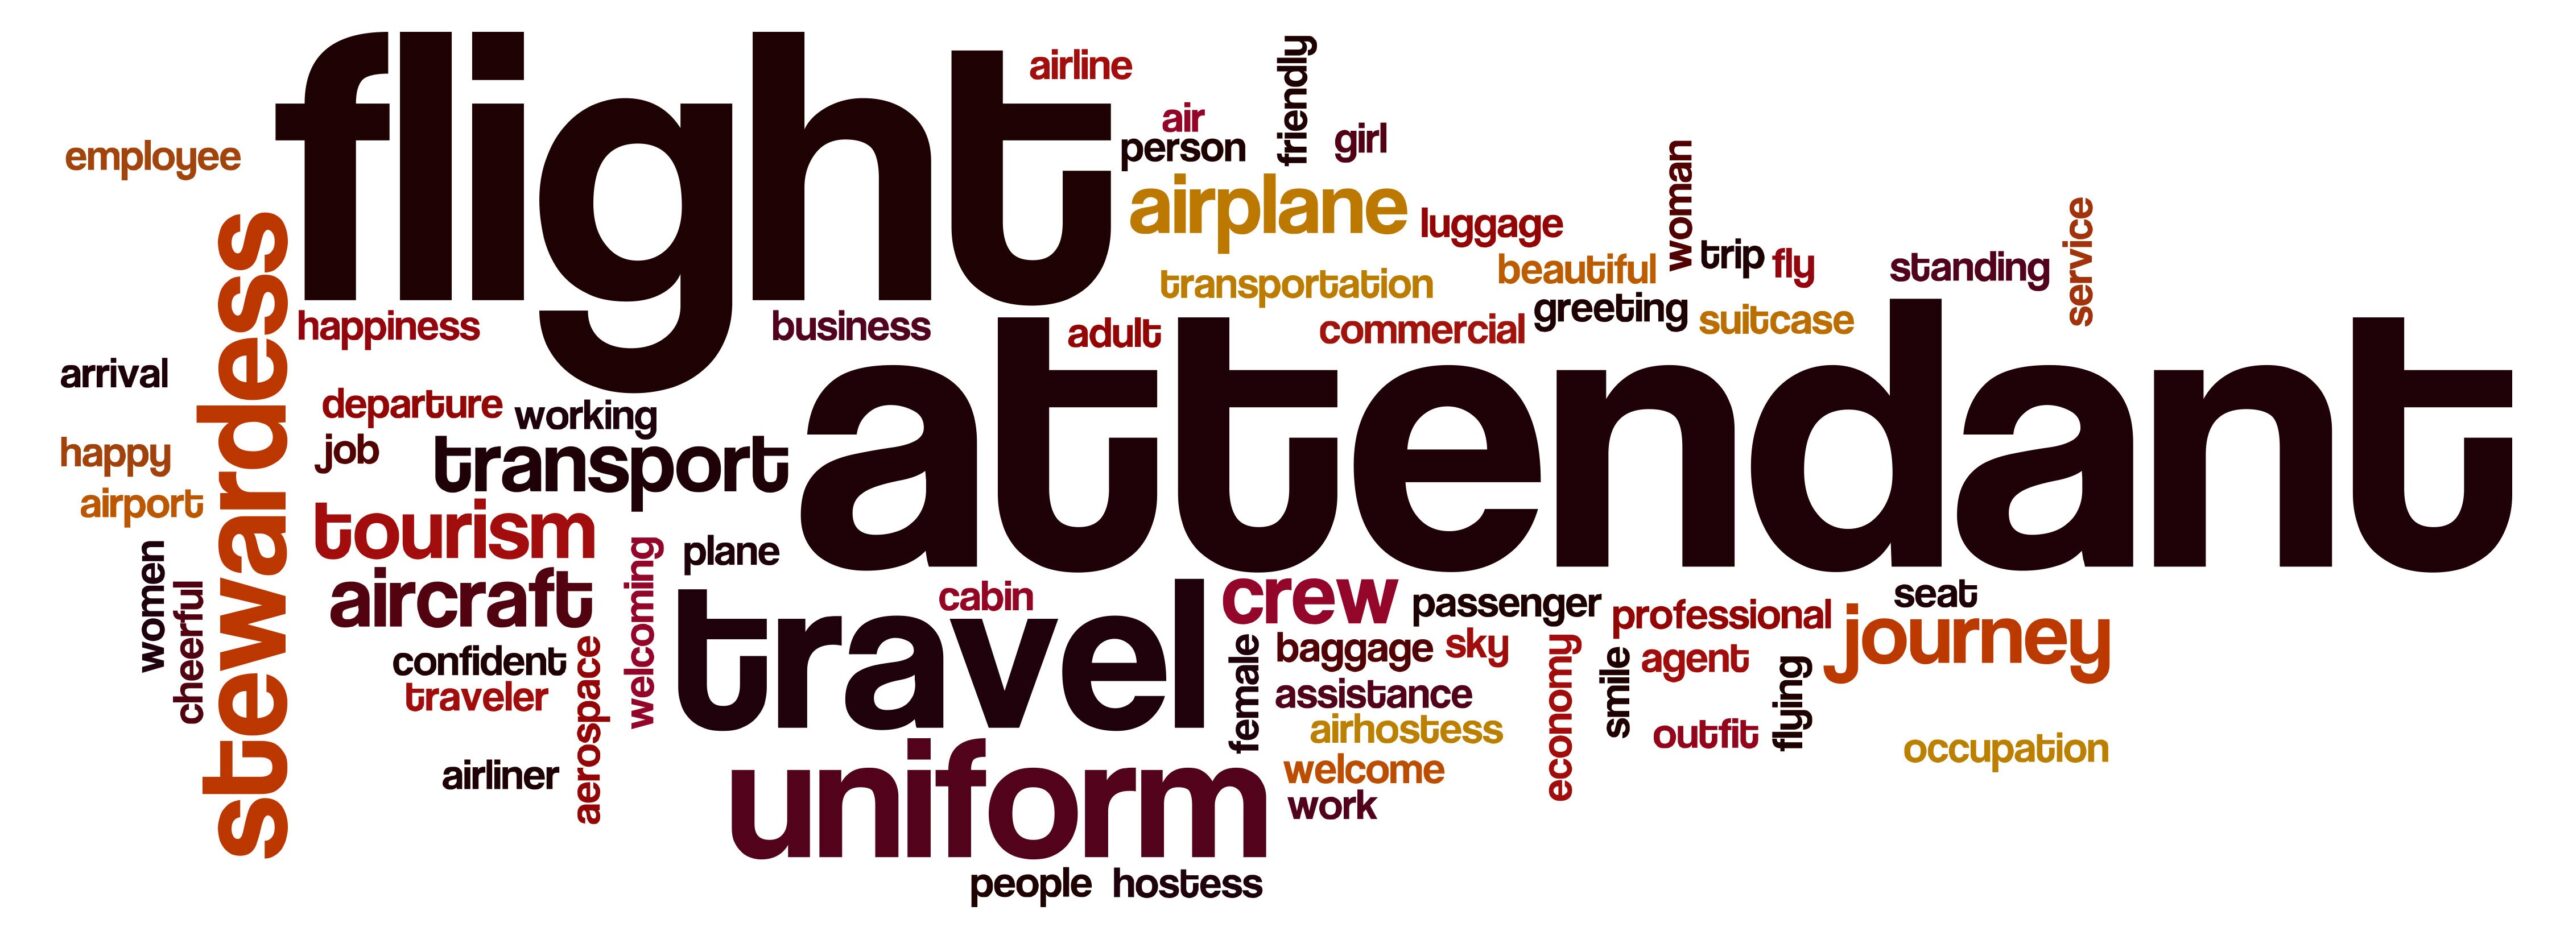 flight attendant course